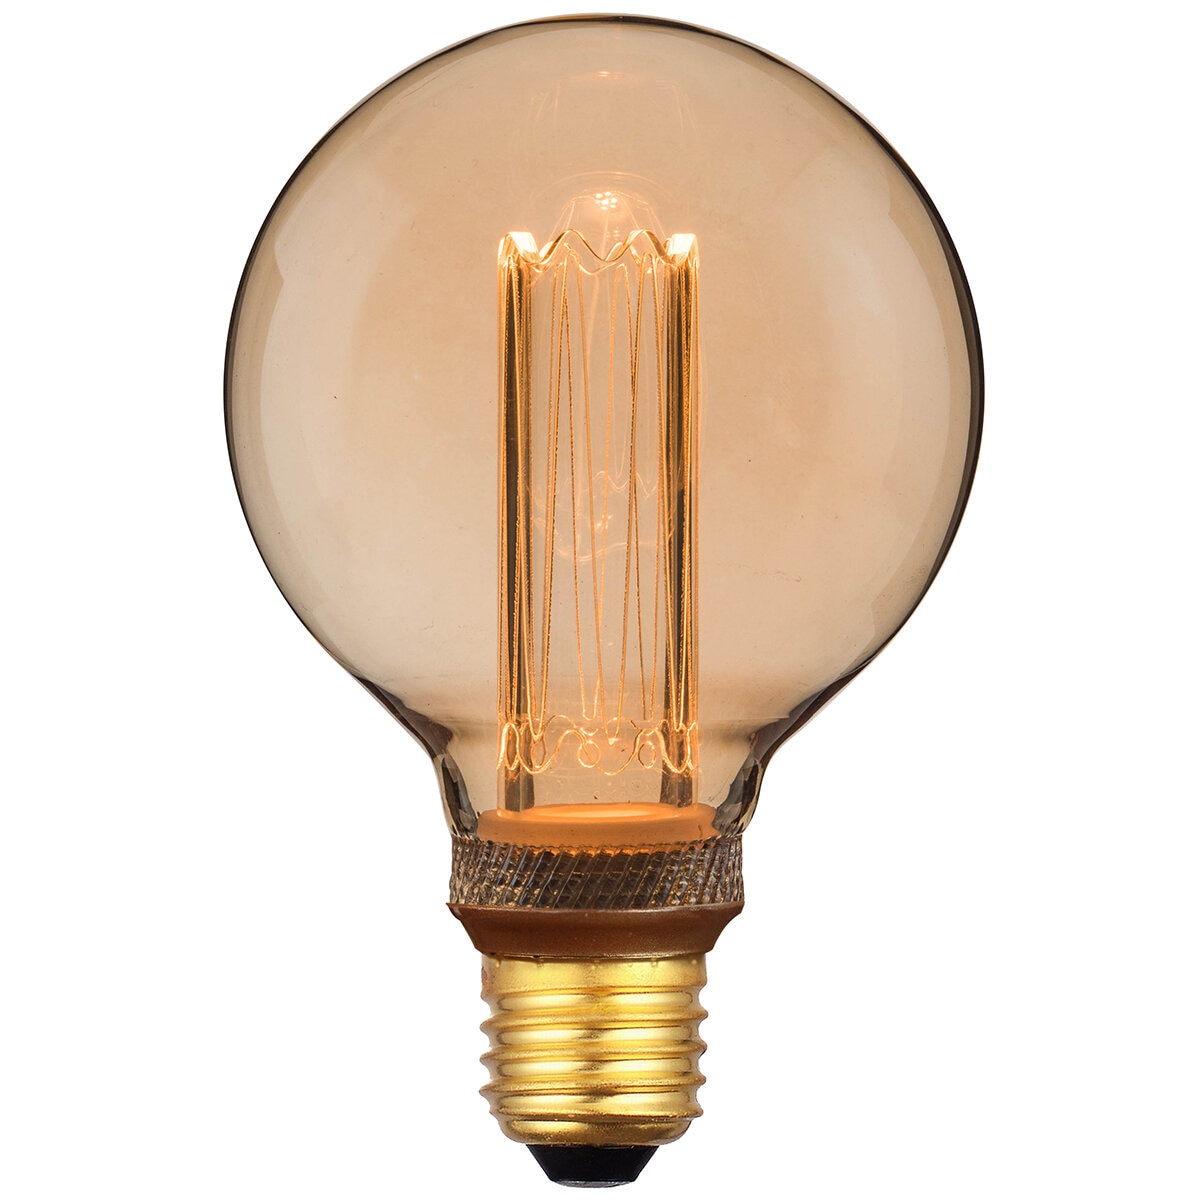 Nordlux Deco Retro G95 LED Filament Lamp Gold